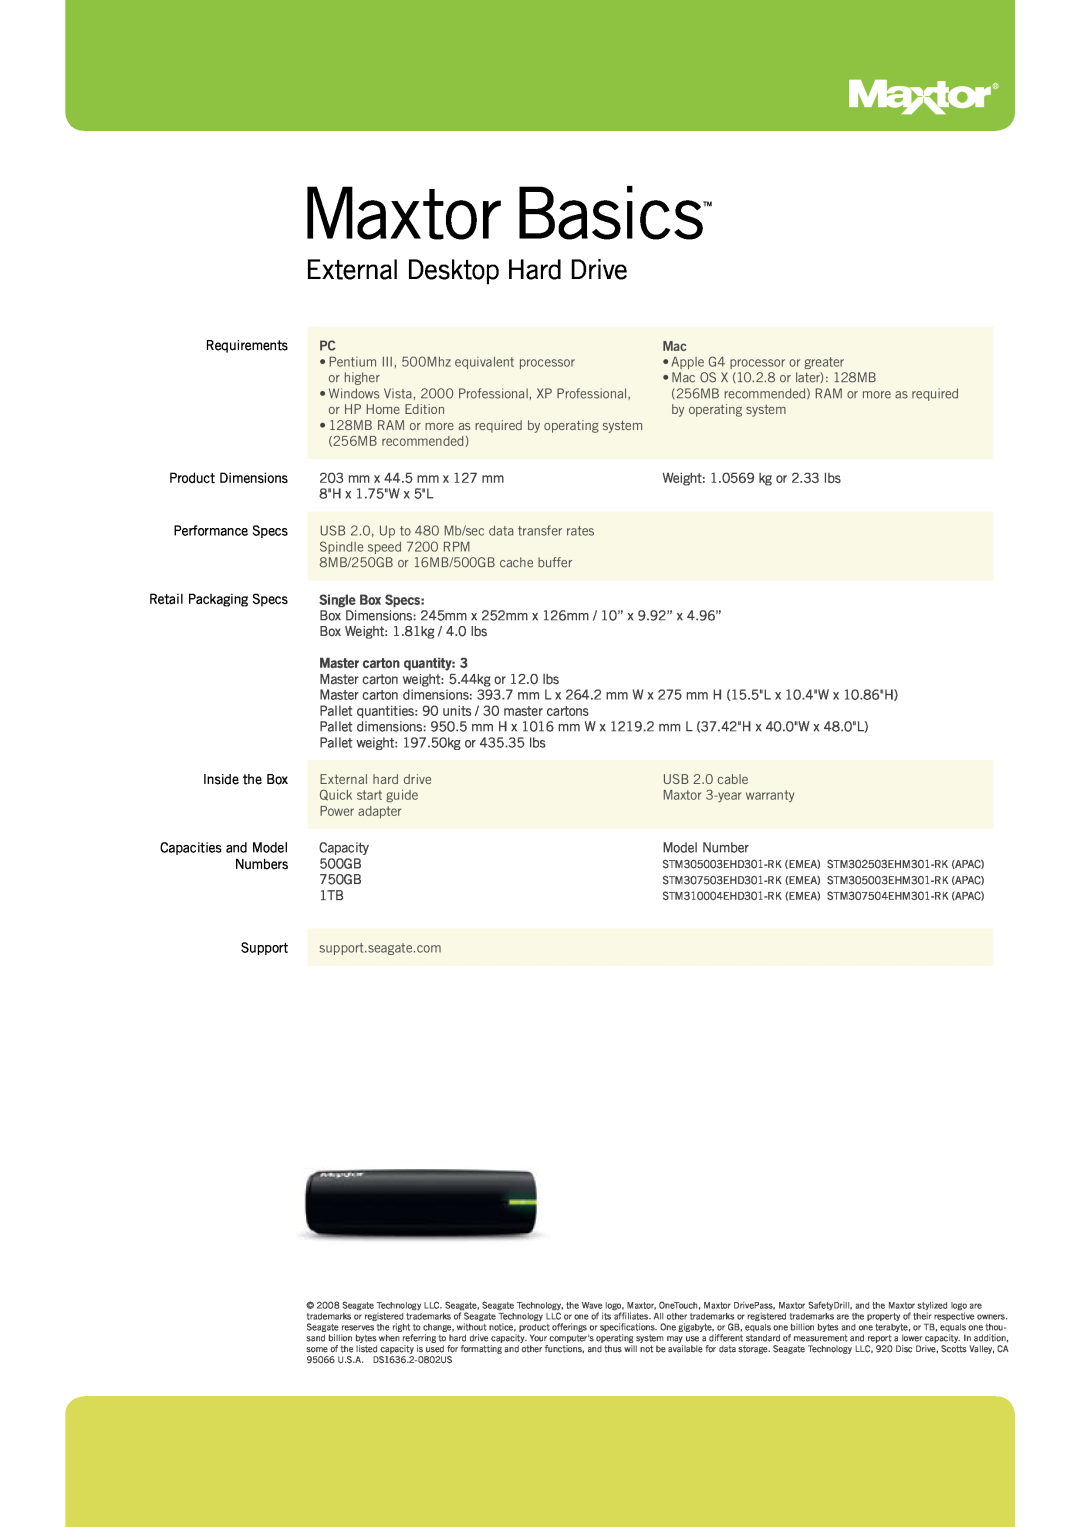 Maxtor STM307504EHM301-RK warranty Maxtor BasicsTM, External Desktop Hard Drive, Single Box Specs, Master carton quantity 